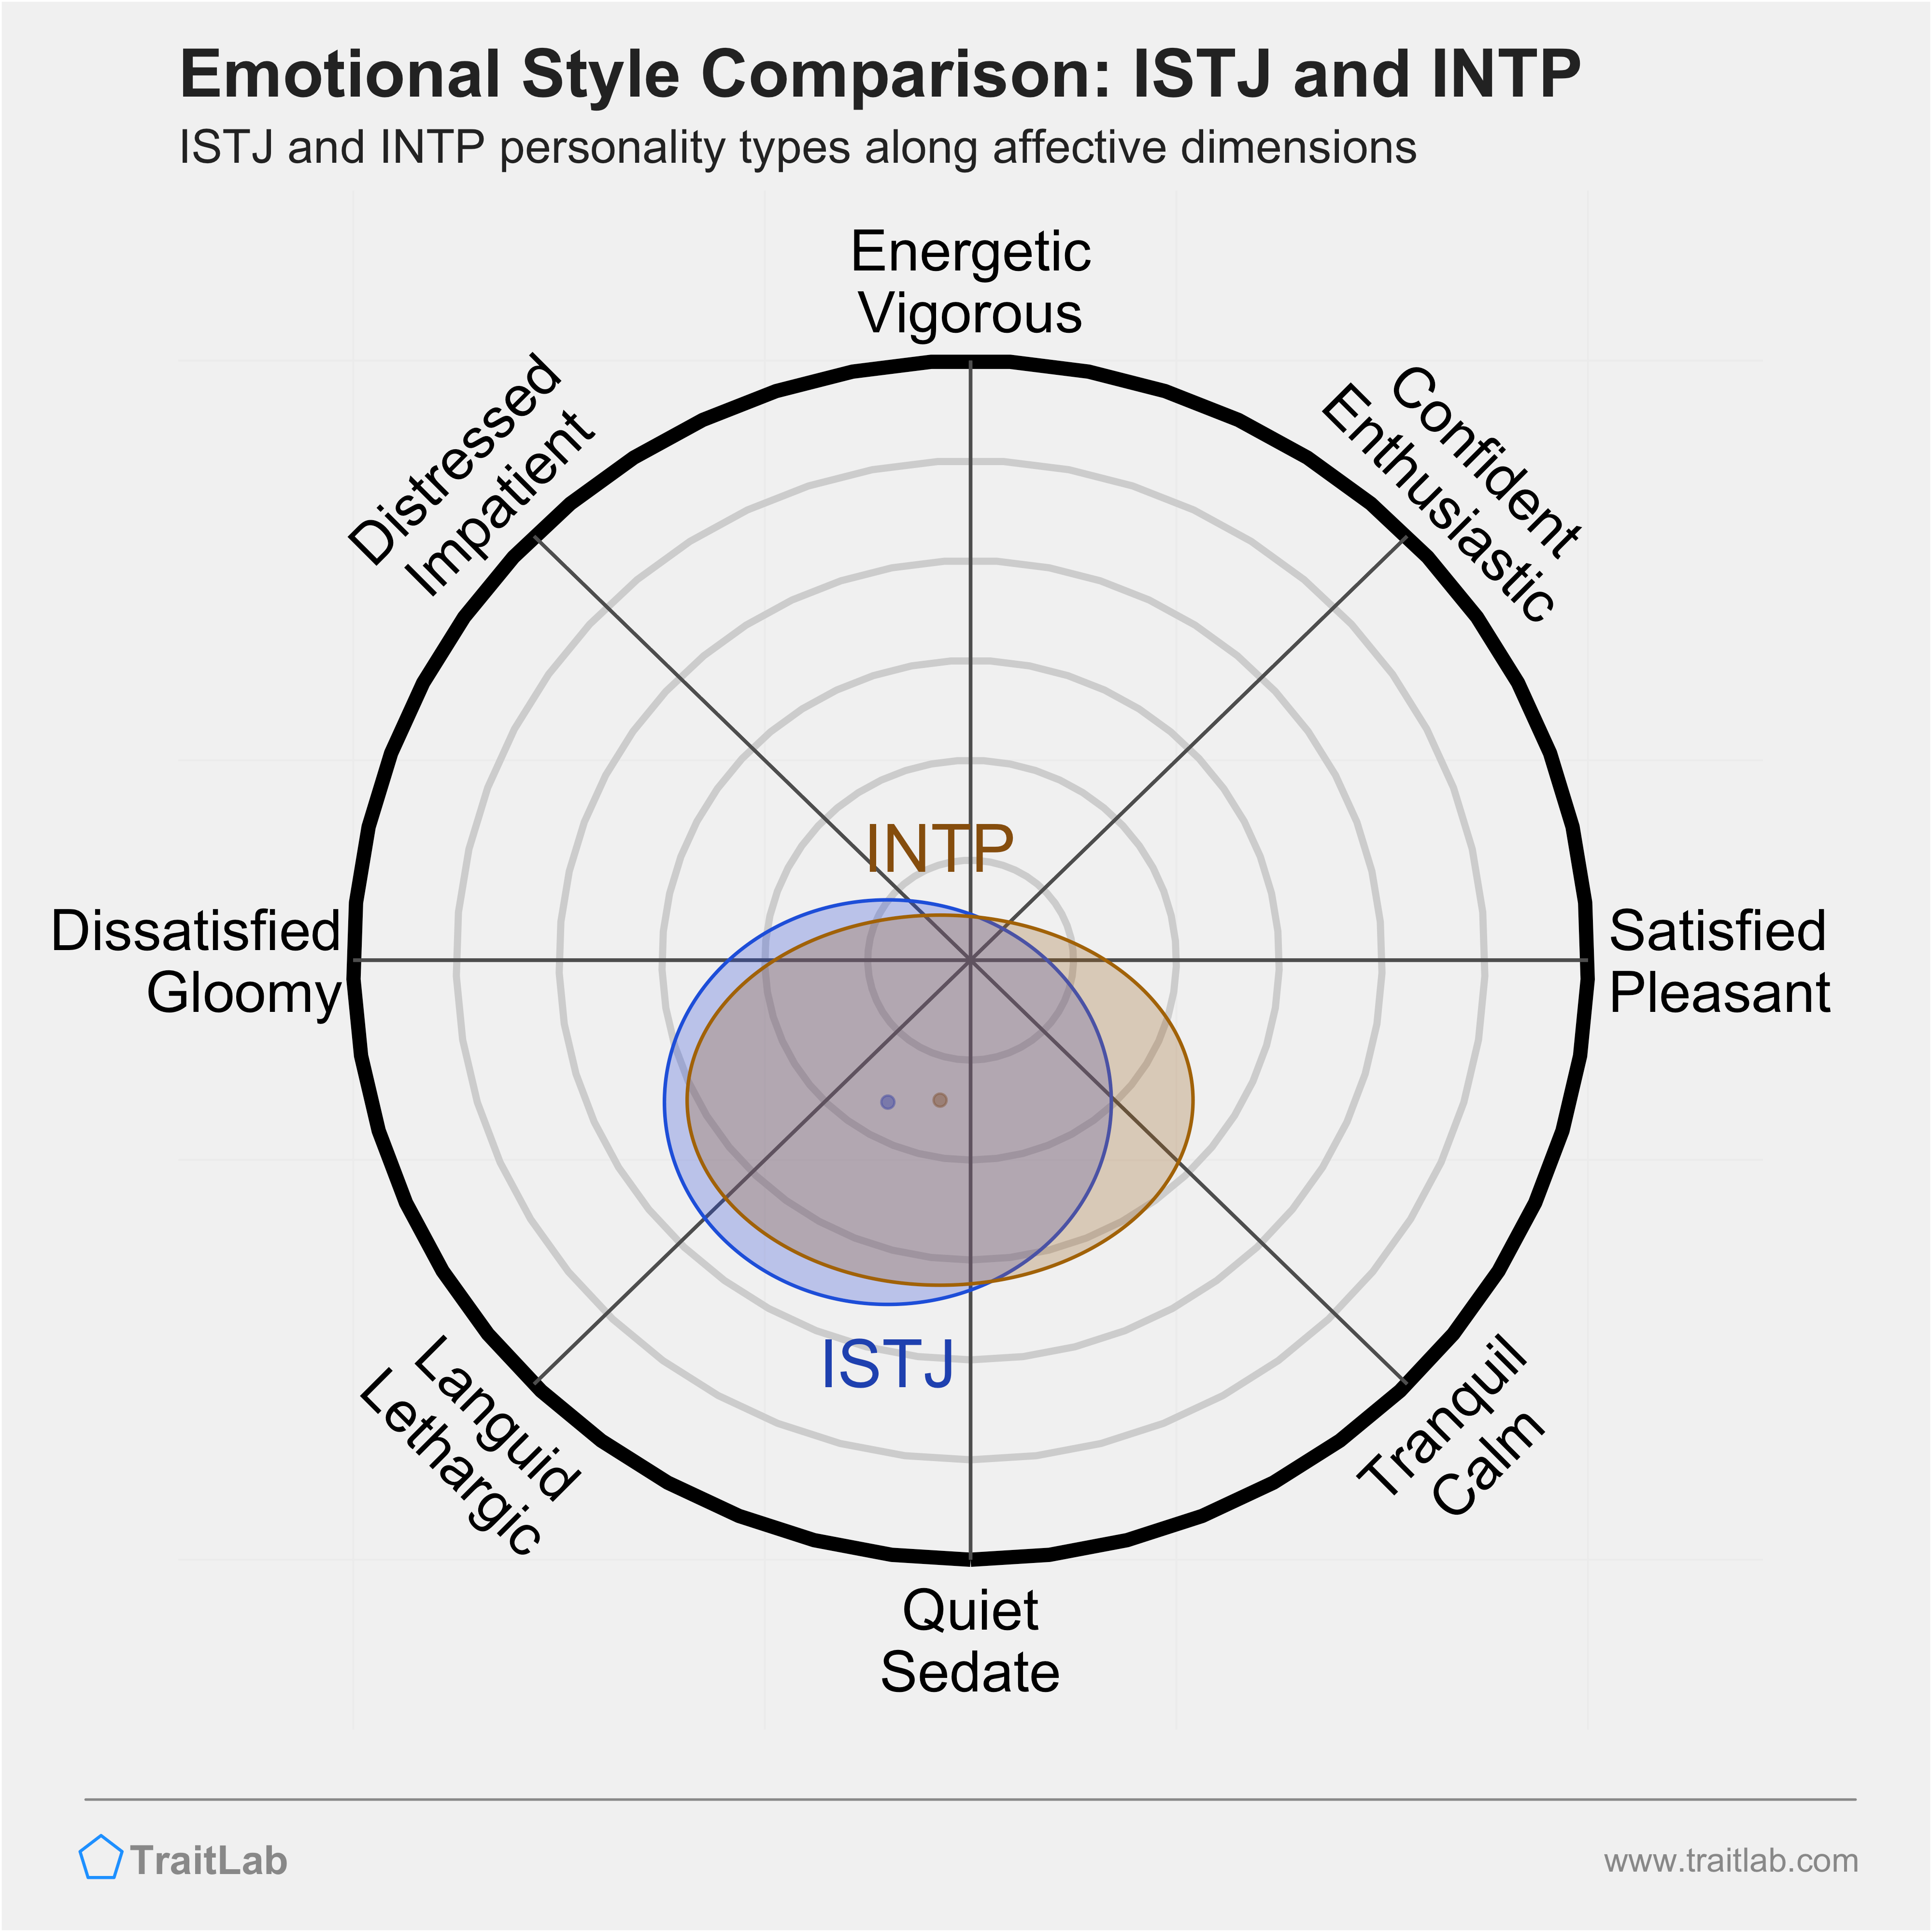 ISTJ and INTP comparison across emotional (affective) dimensions